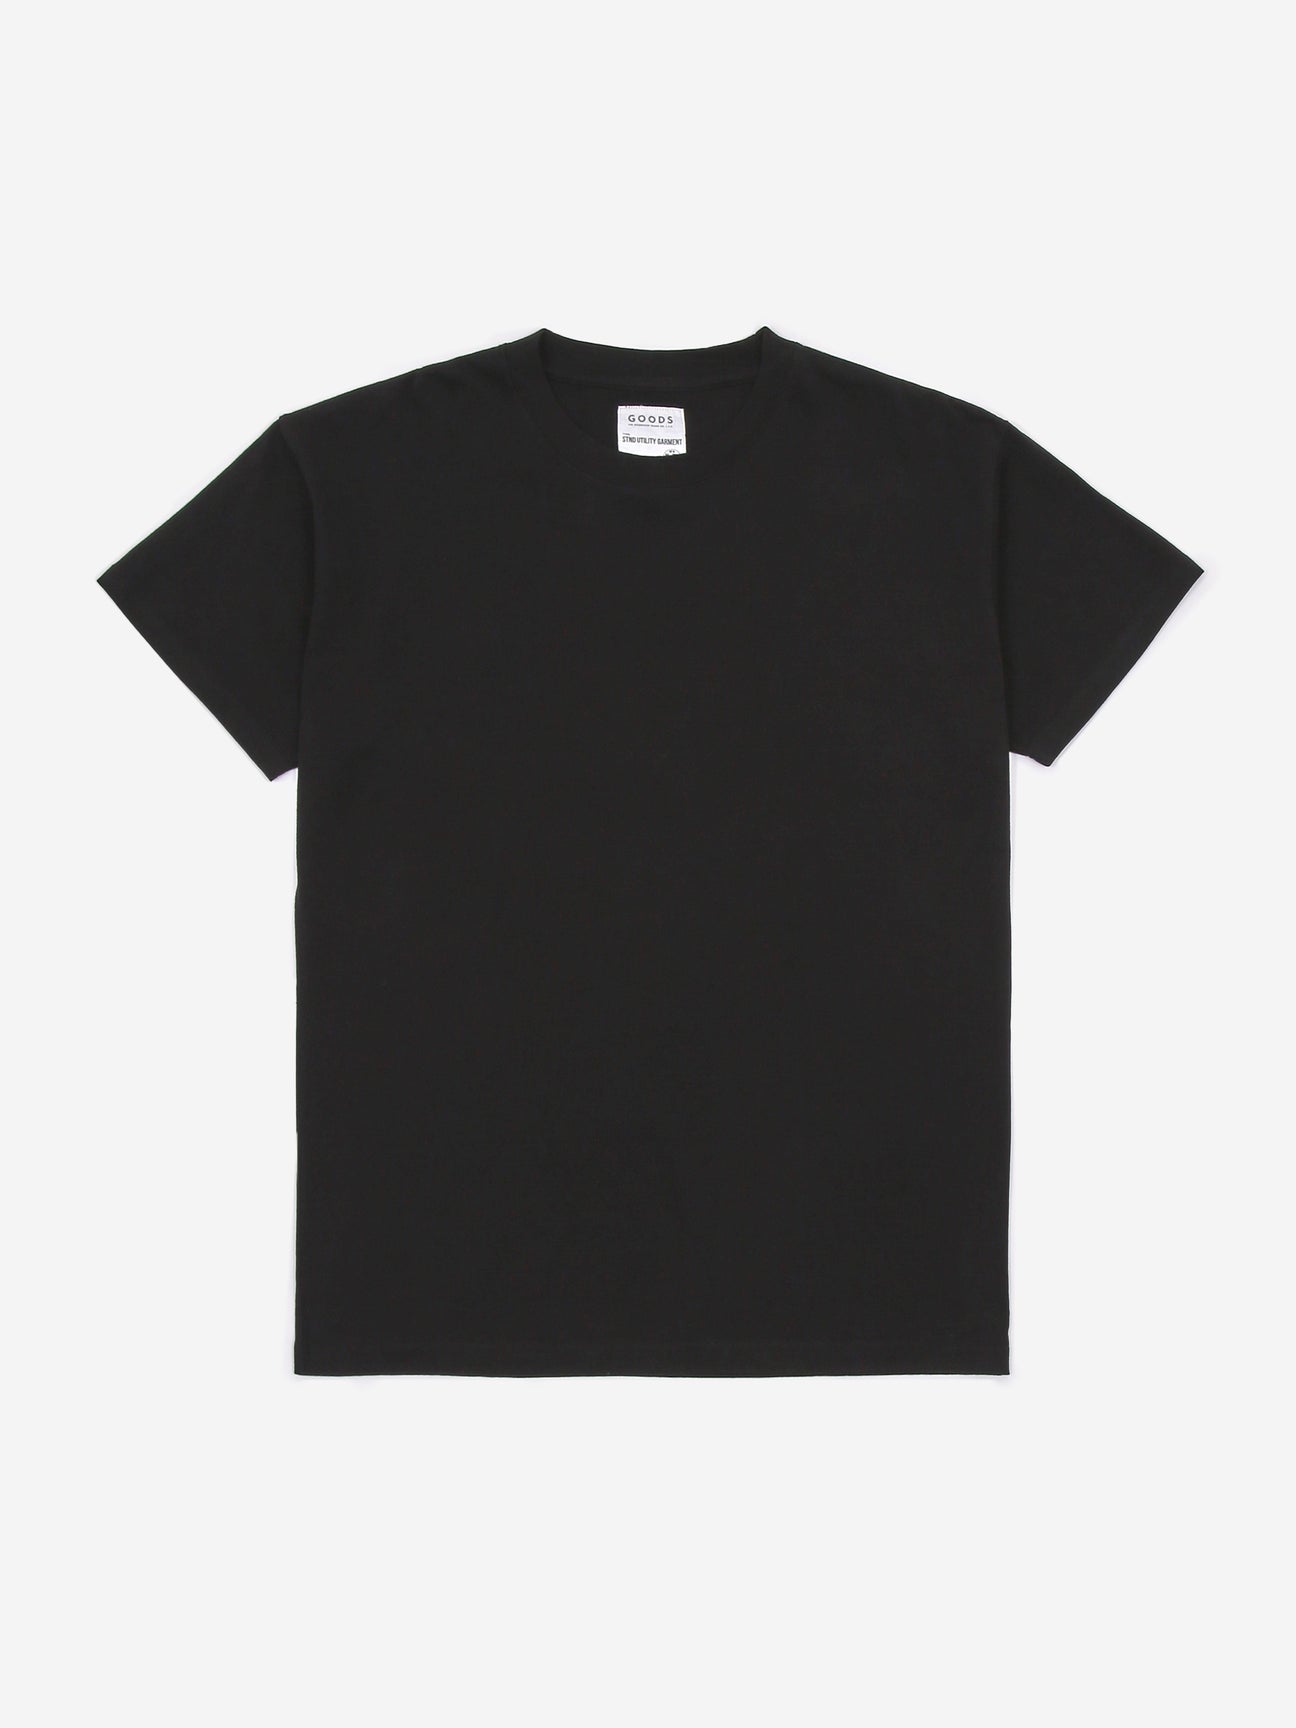 Goods by Goodhood Classic T-Shirt - Black